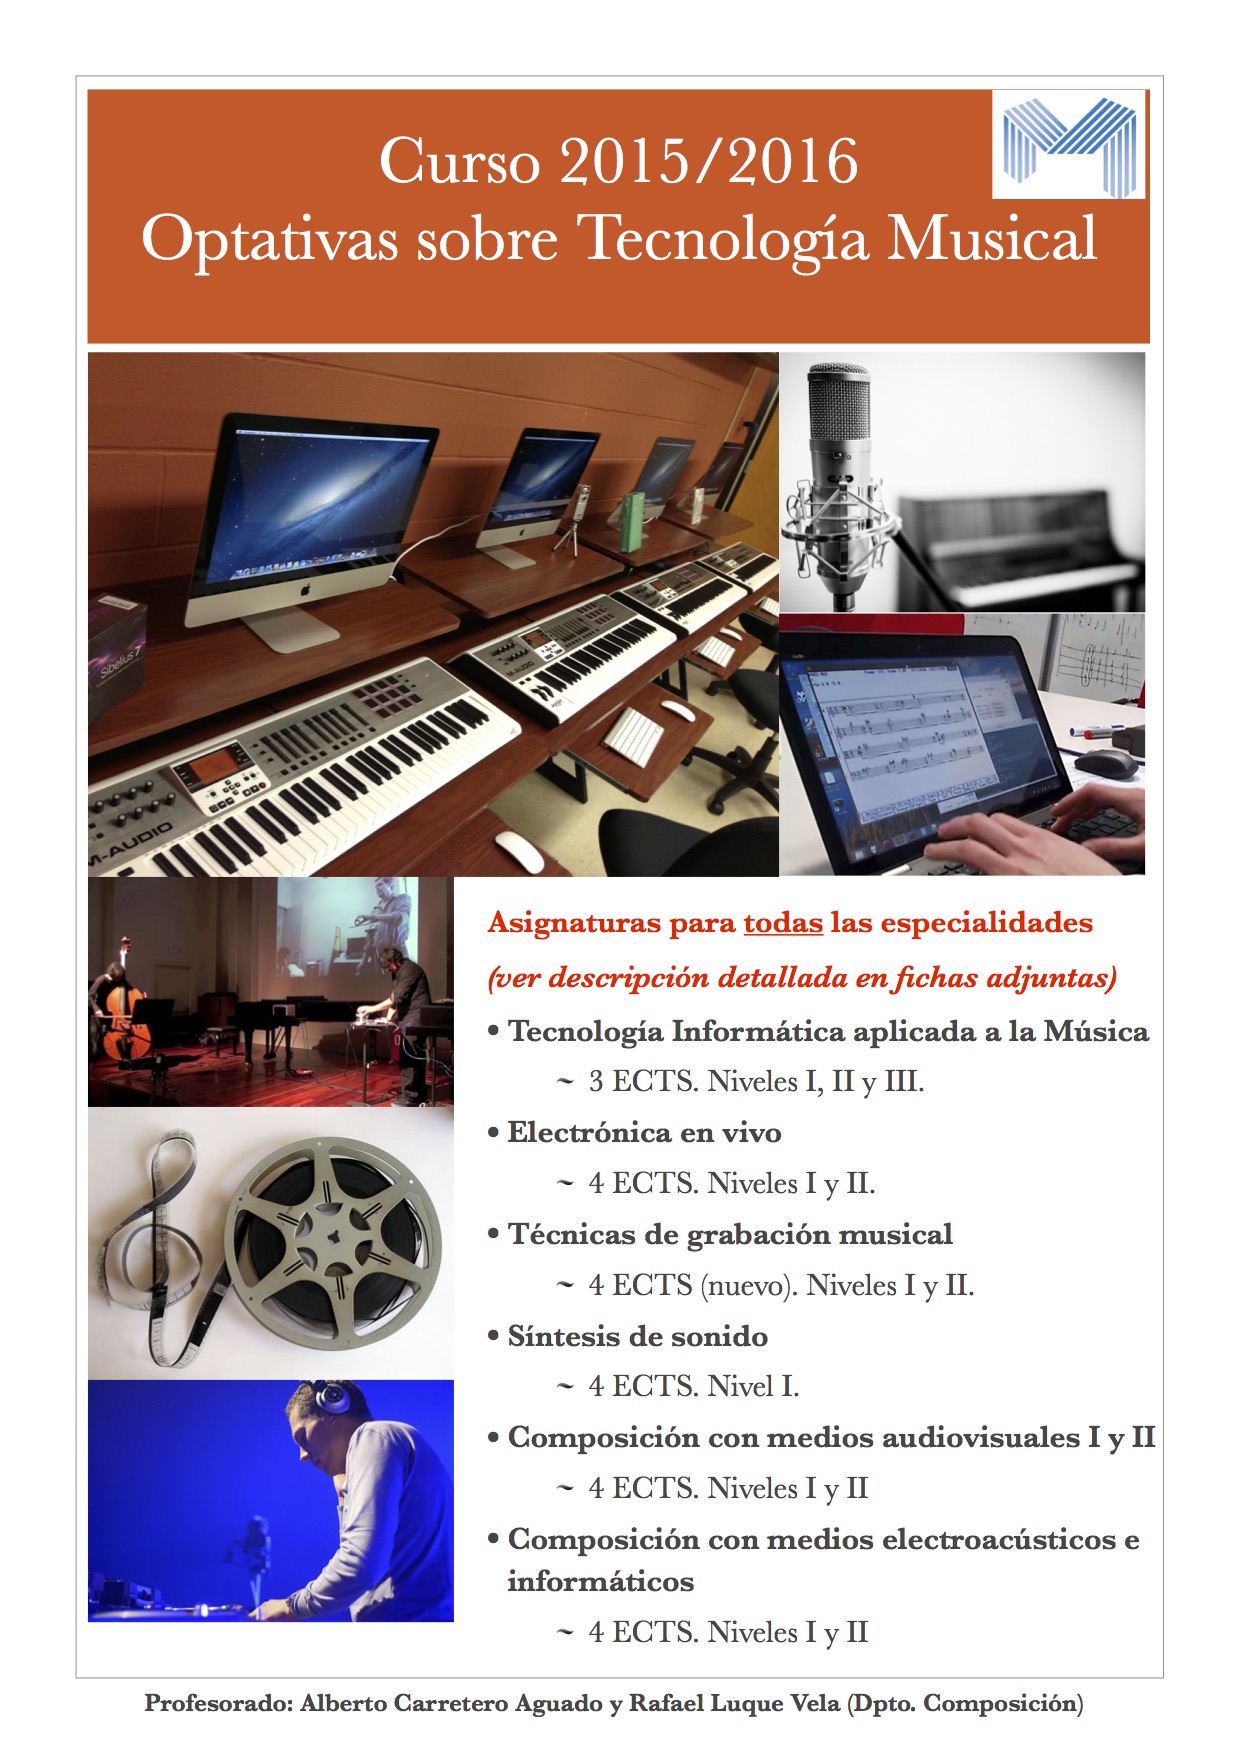 Optativas de Tecnología Musical, curso 2015-2016